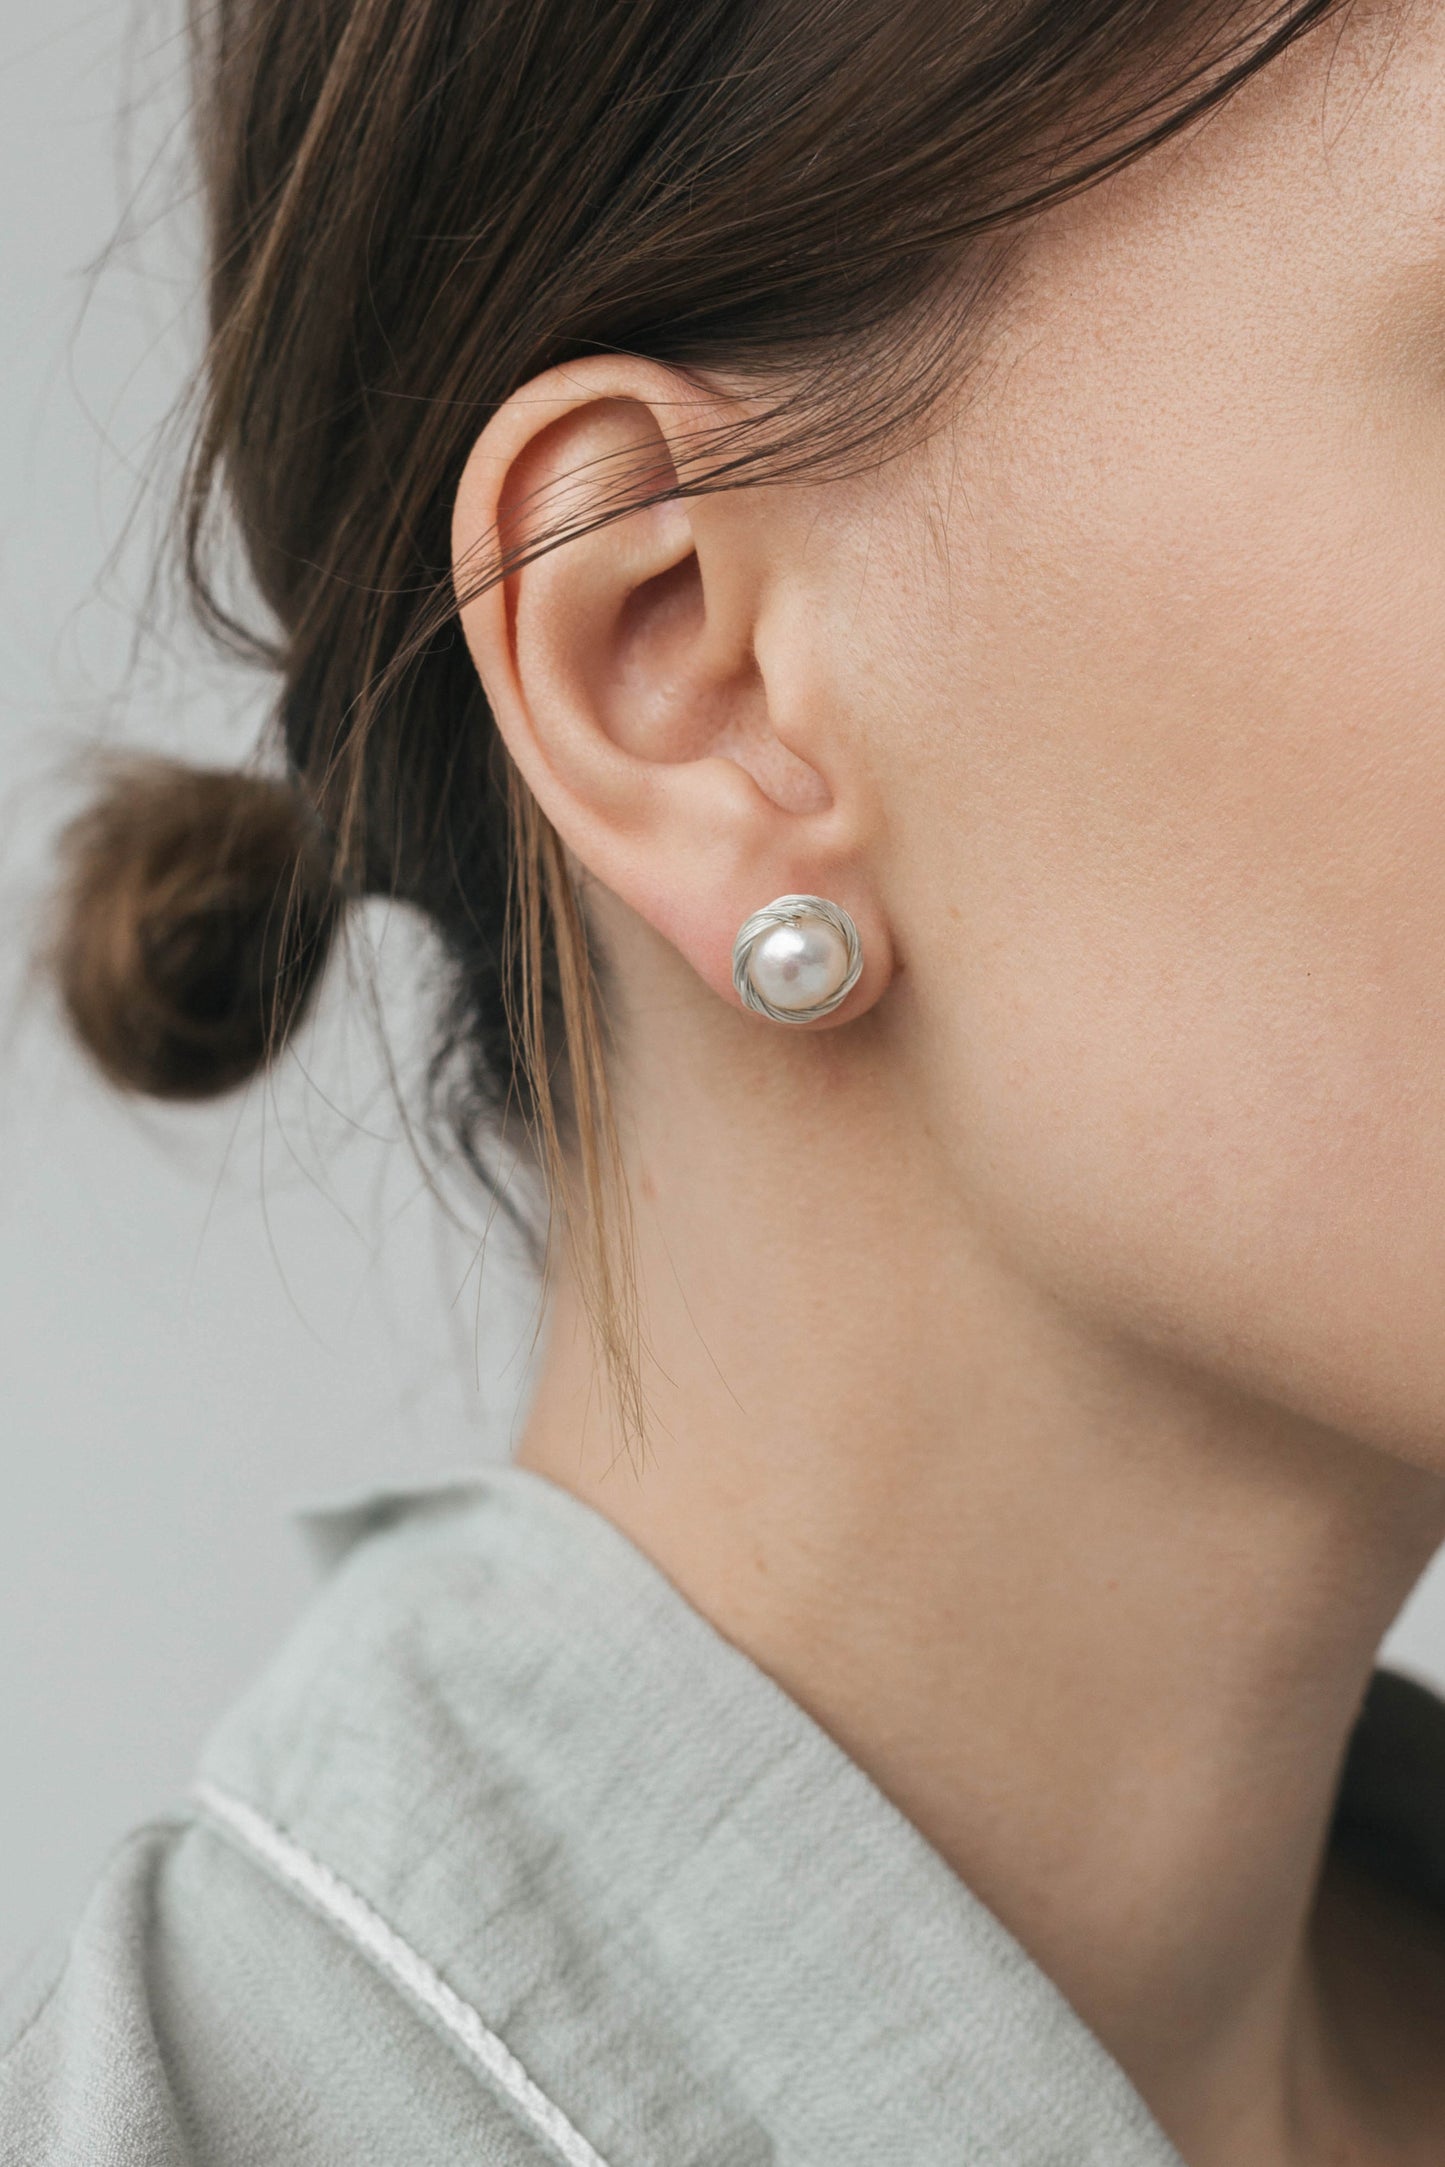 White pearl earrings formal silver